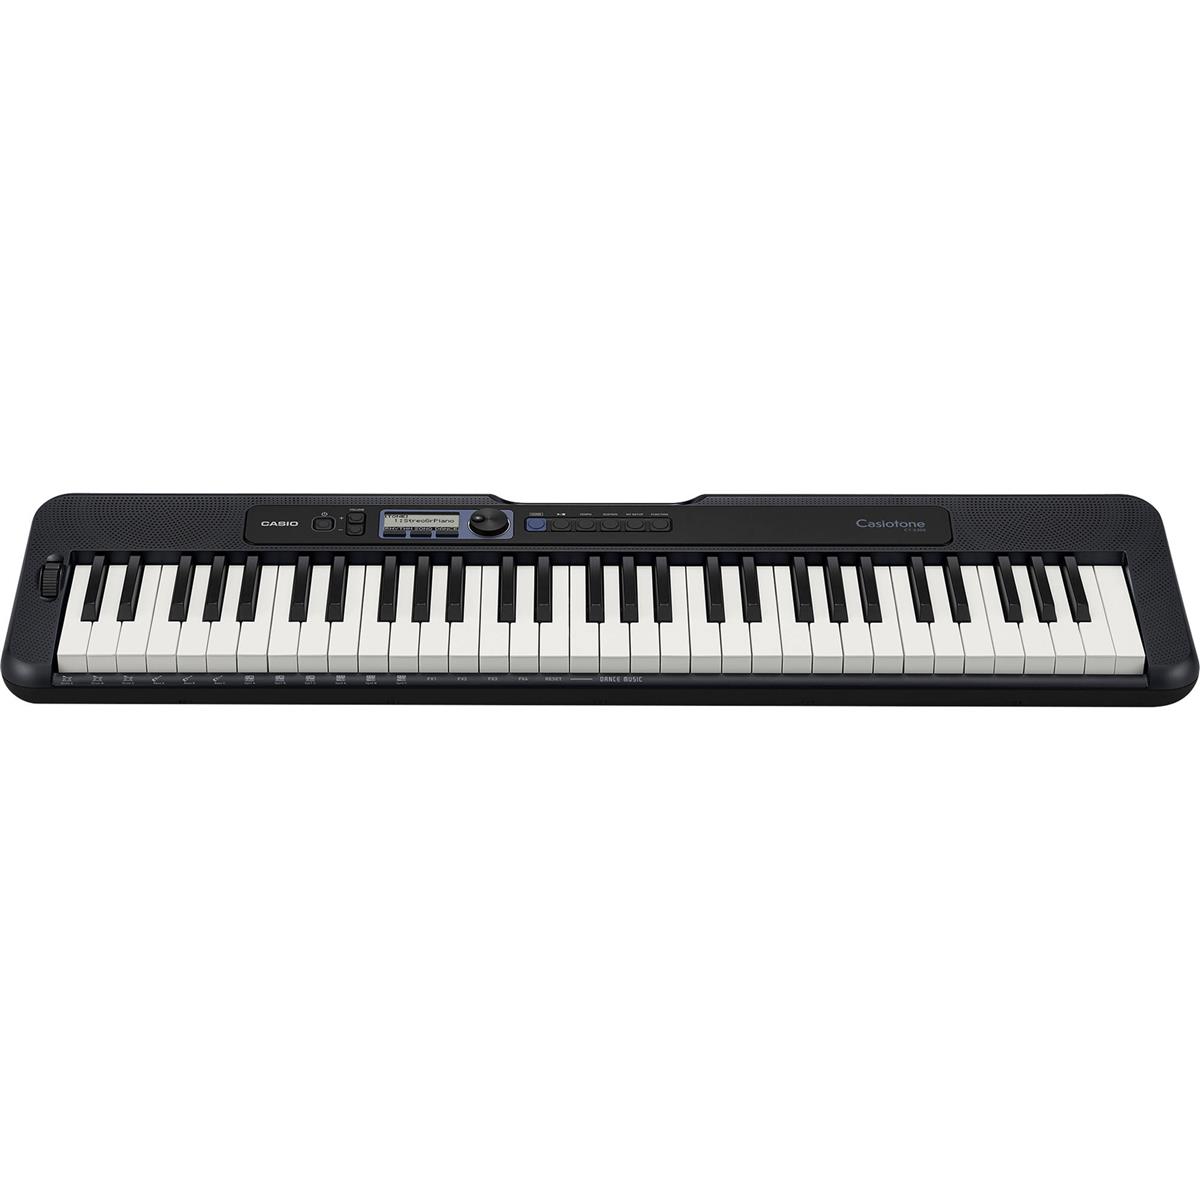 Casio CT-S300 61-Key Portable Keyboard $119 + free s/h